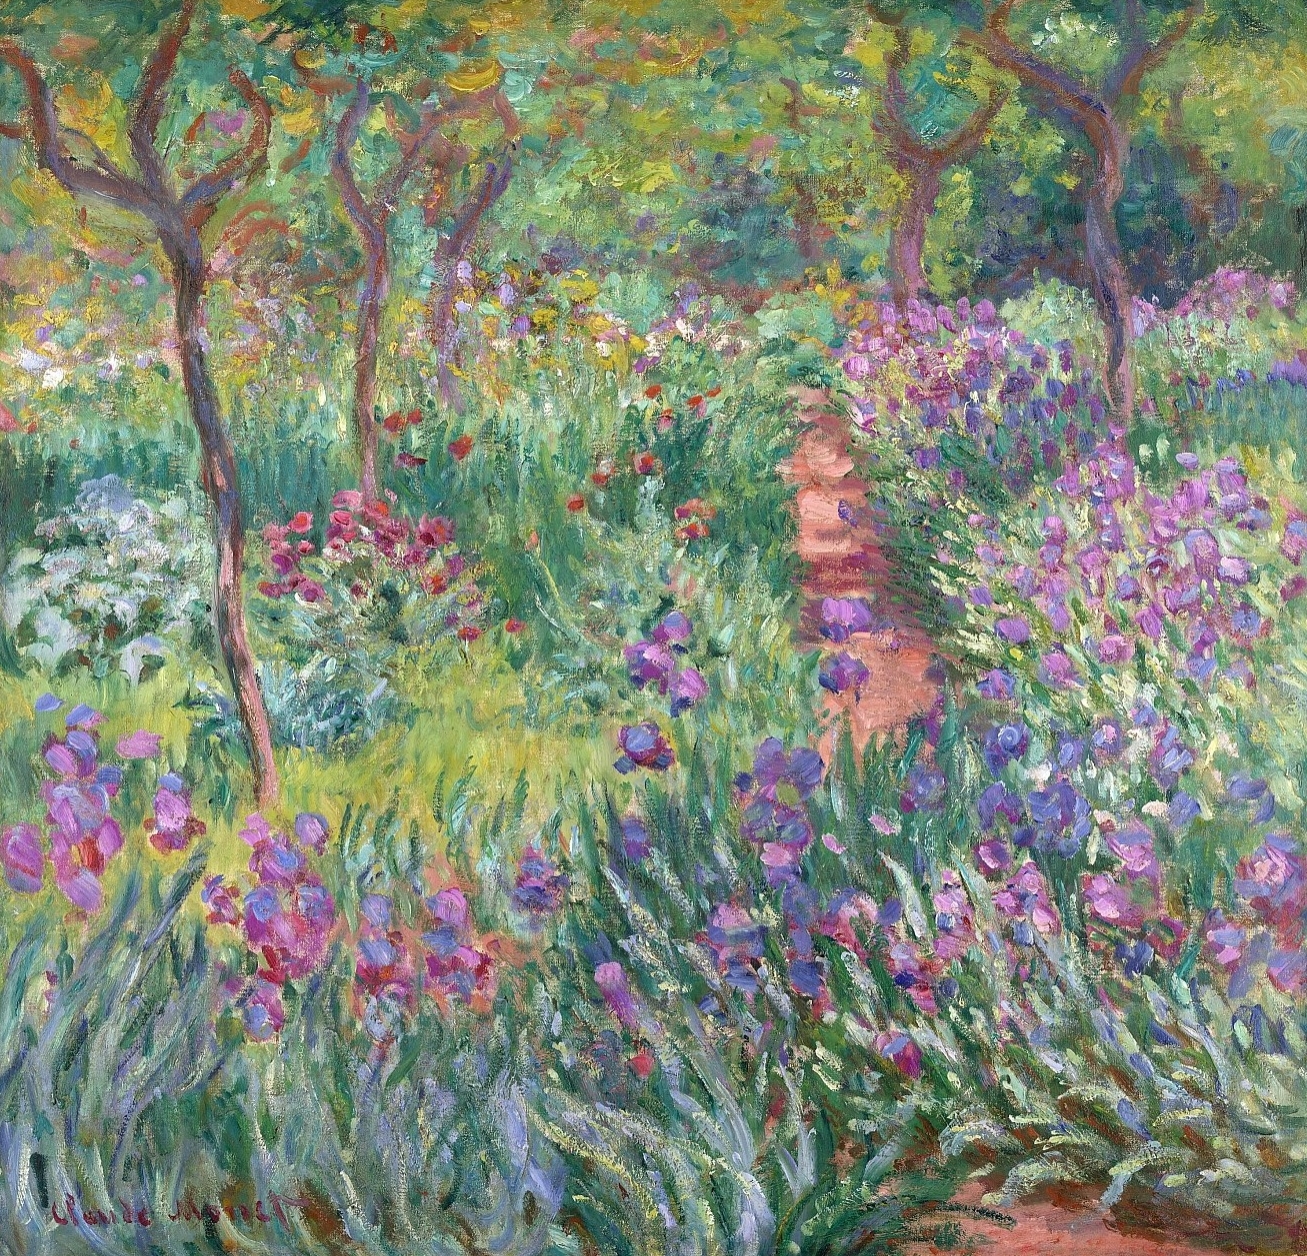 Claude+Monet-1840-1926 (882).jpg